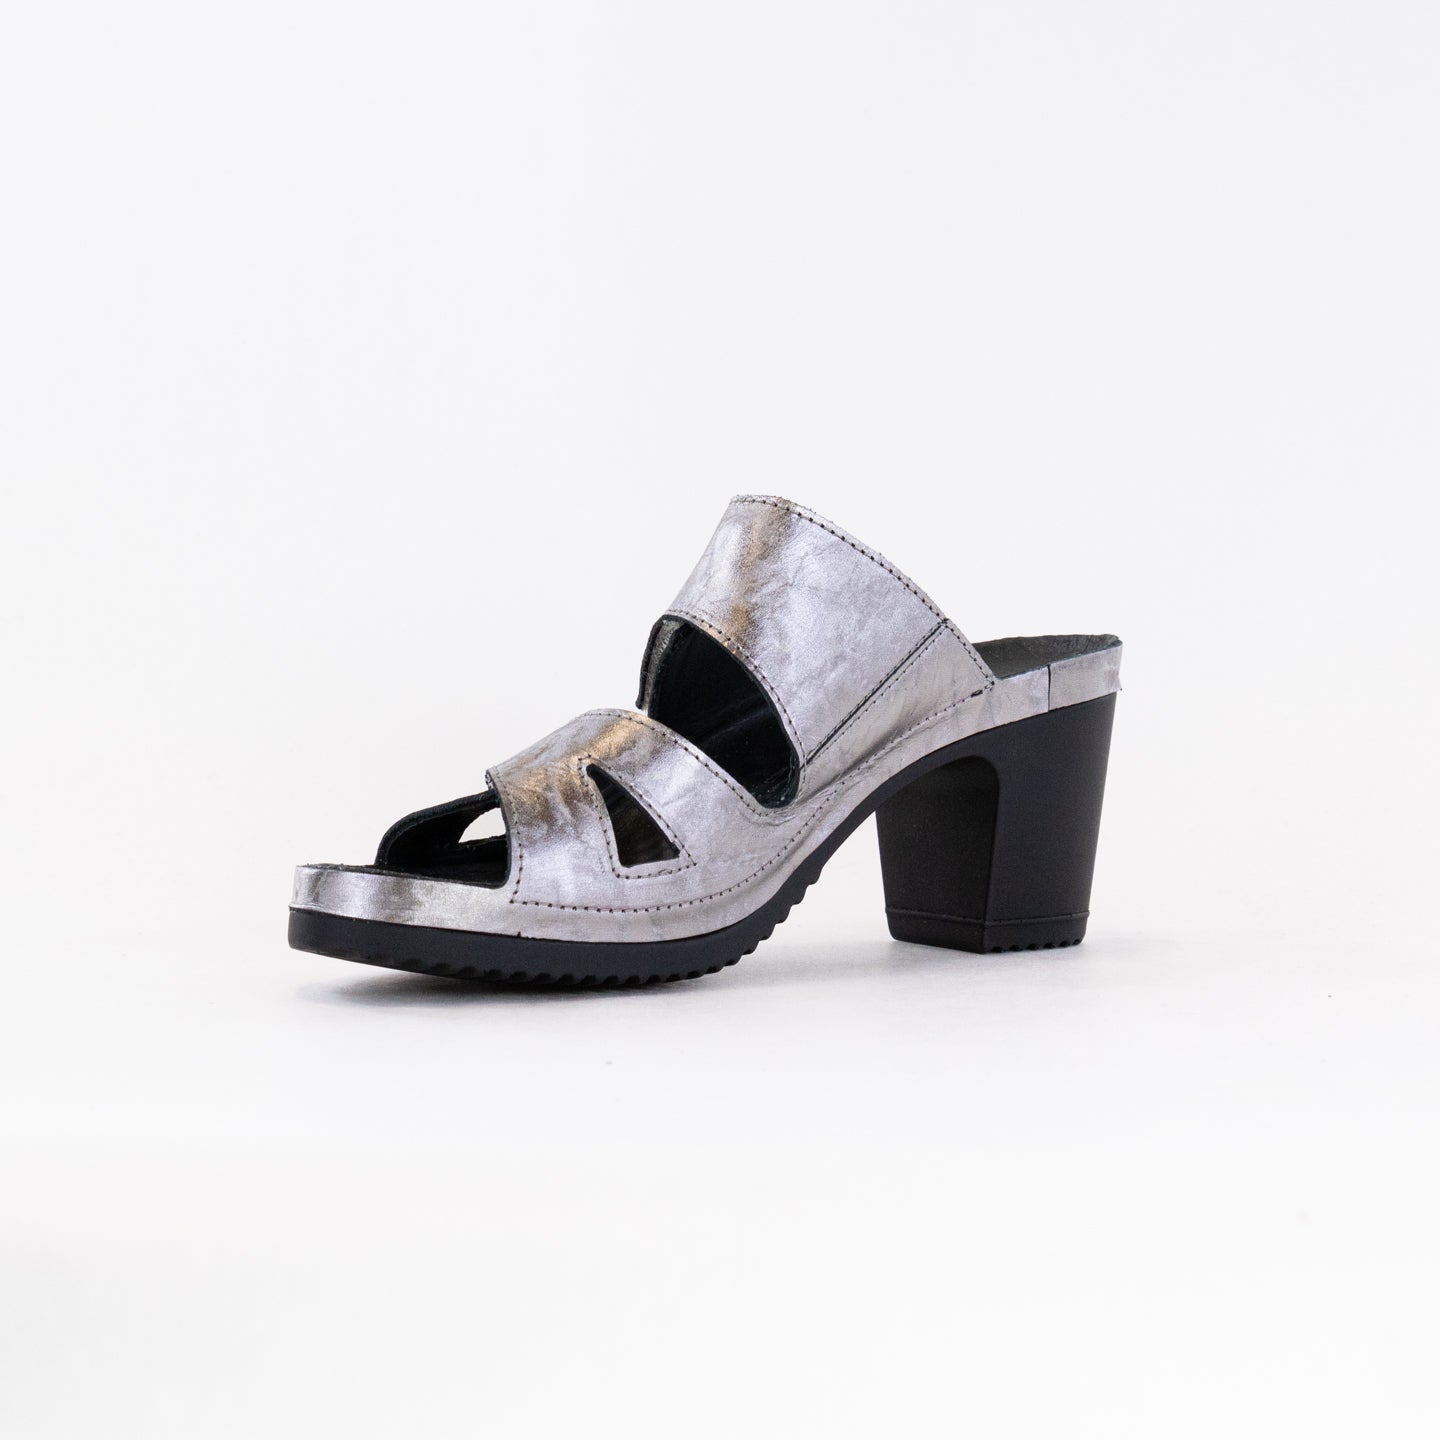 Vital Petra Mule Sandal (Women's) - Platinum Metallic Leather